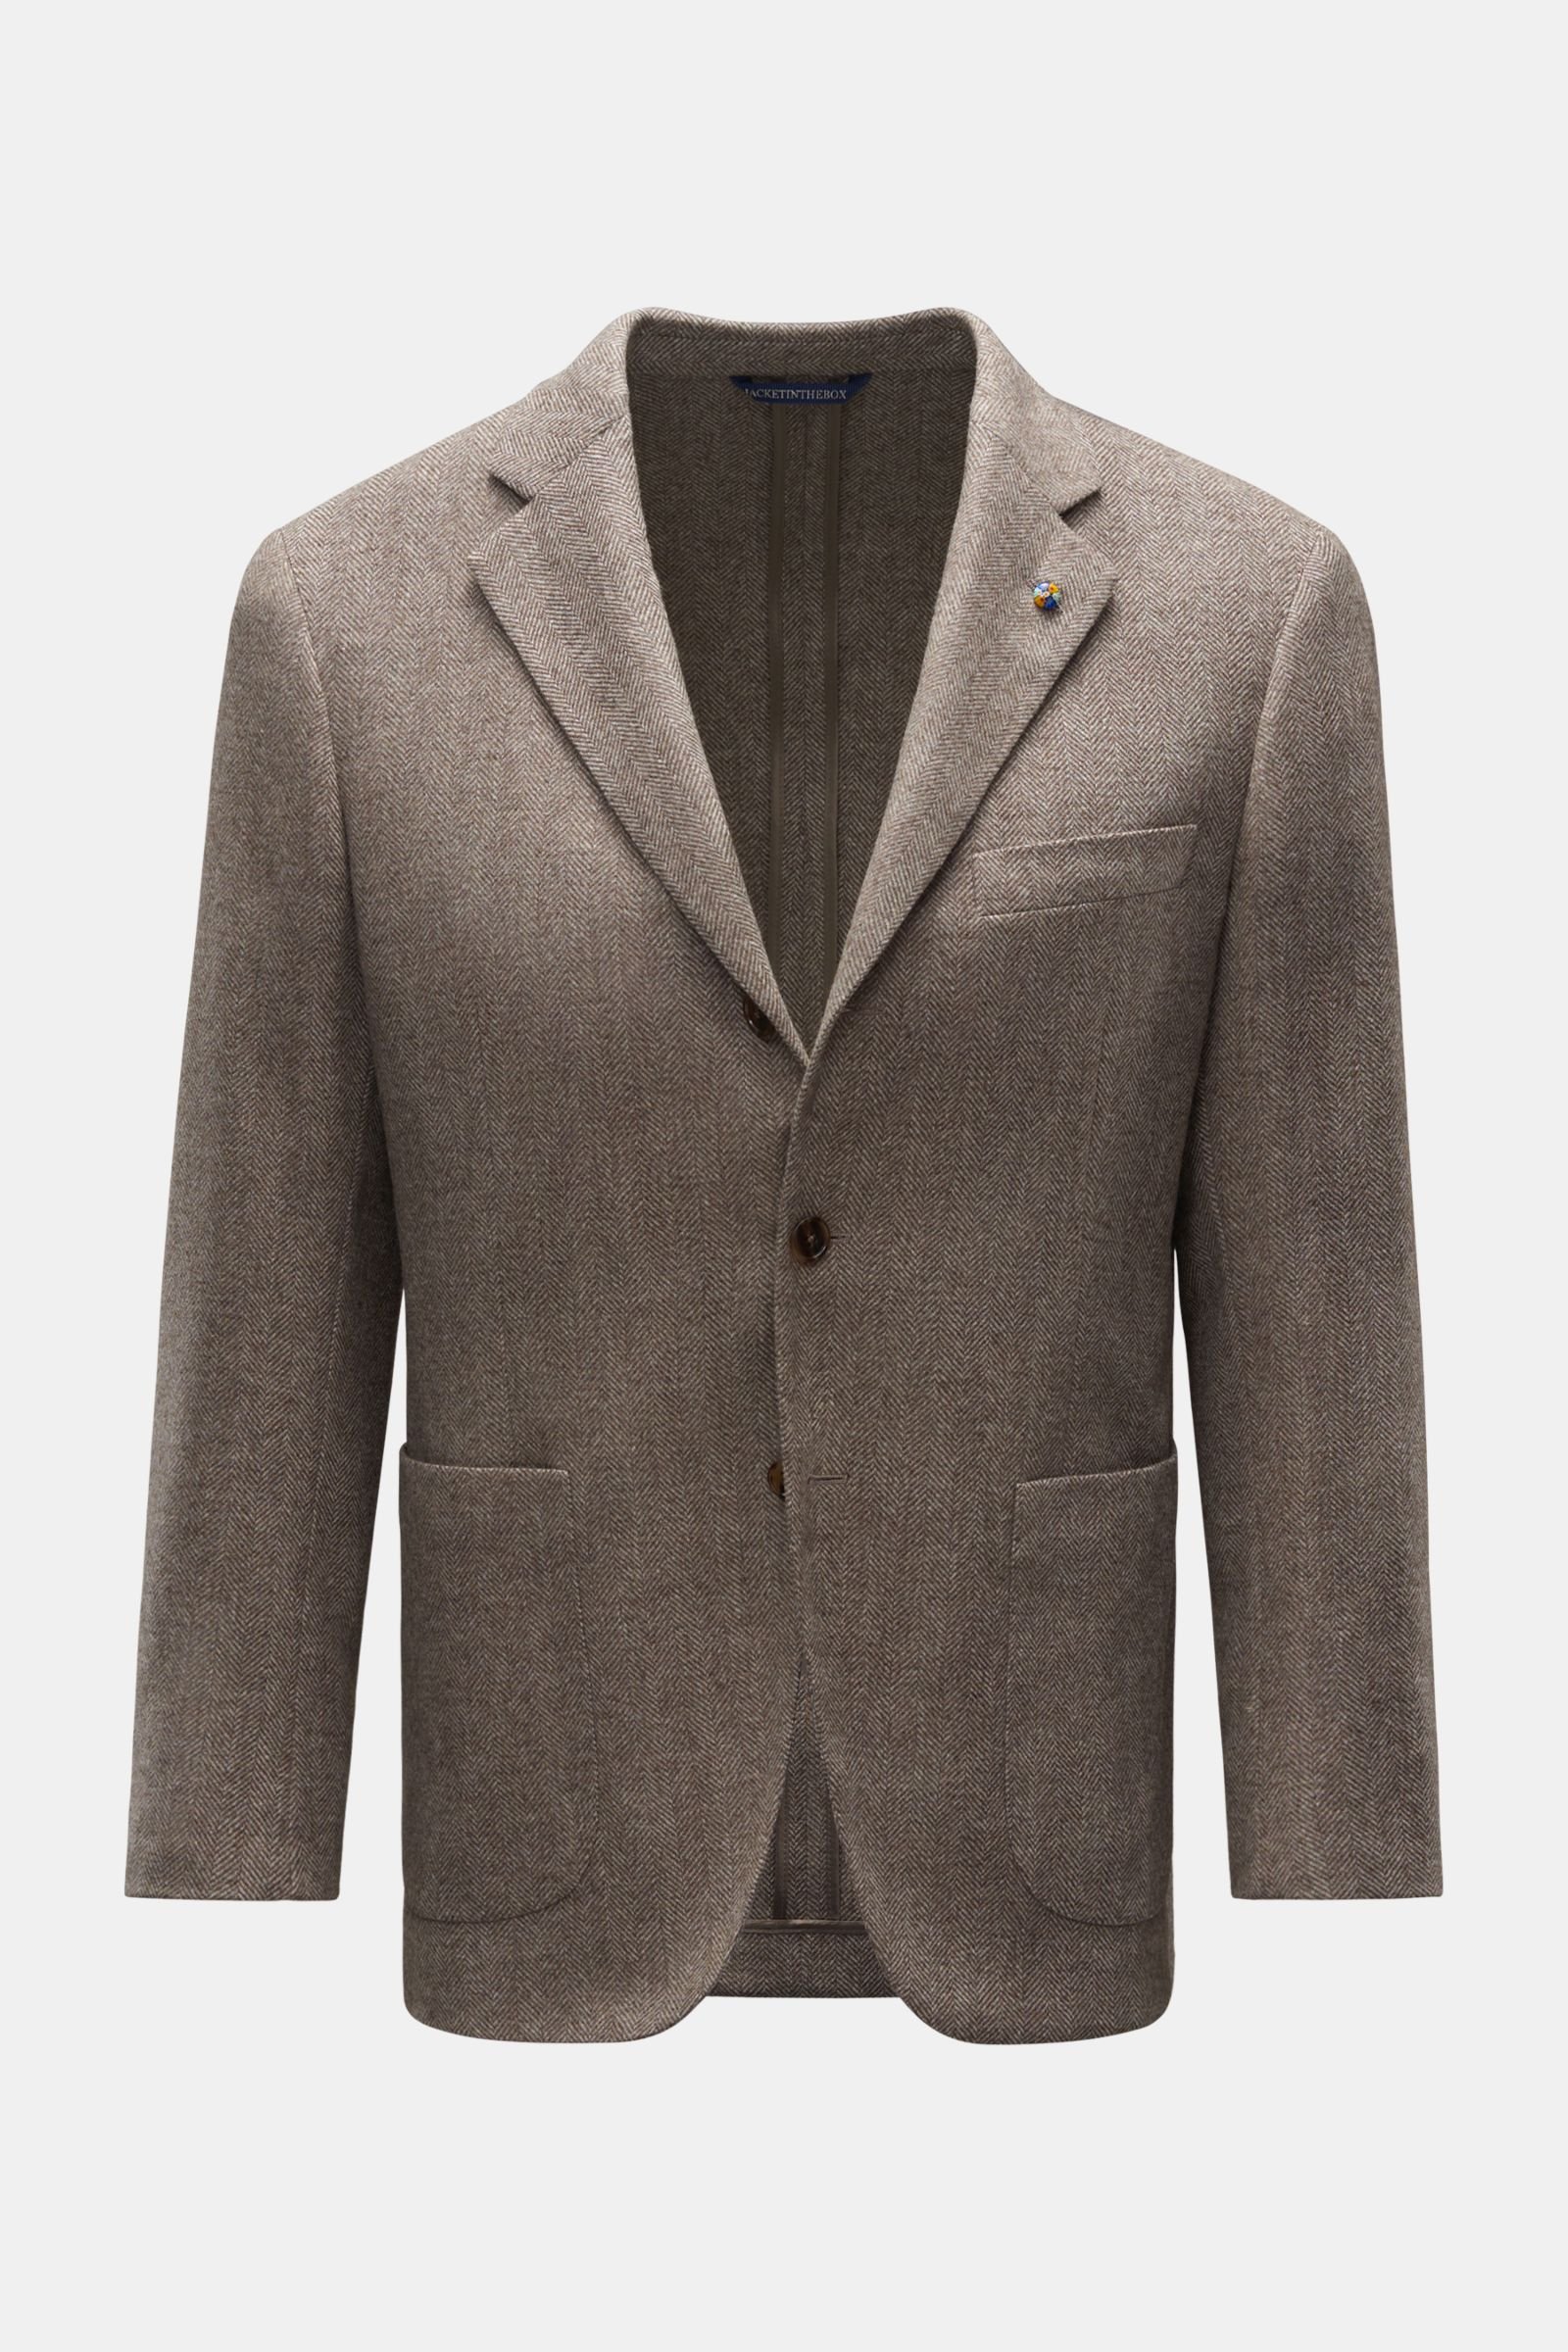 Smart-casual jacket brown/beige patterned 